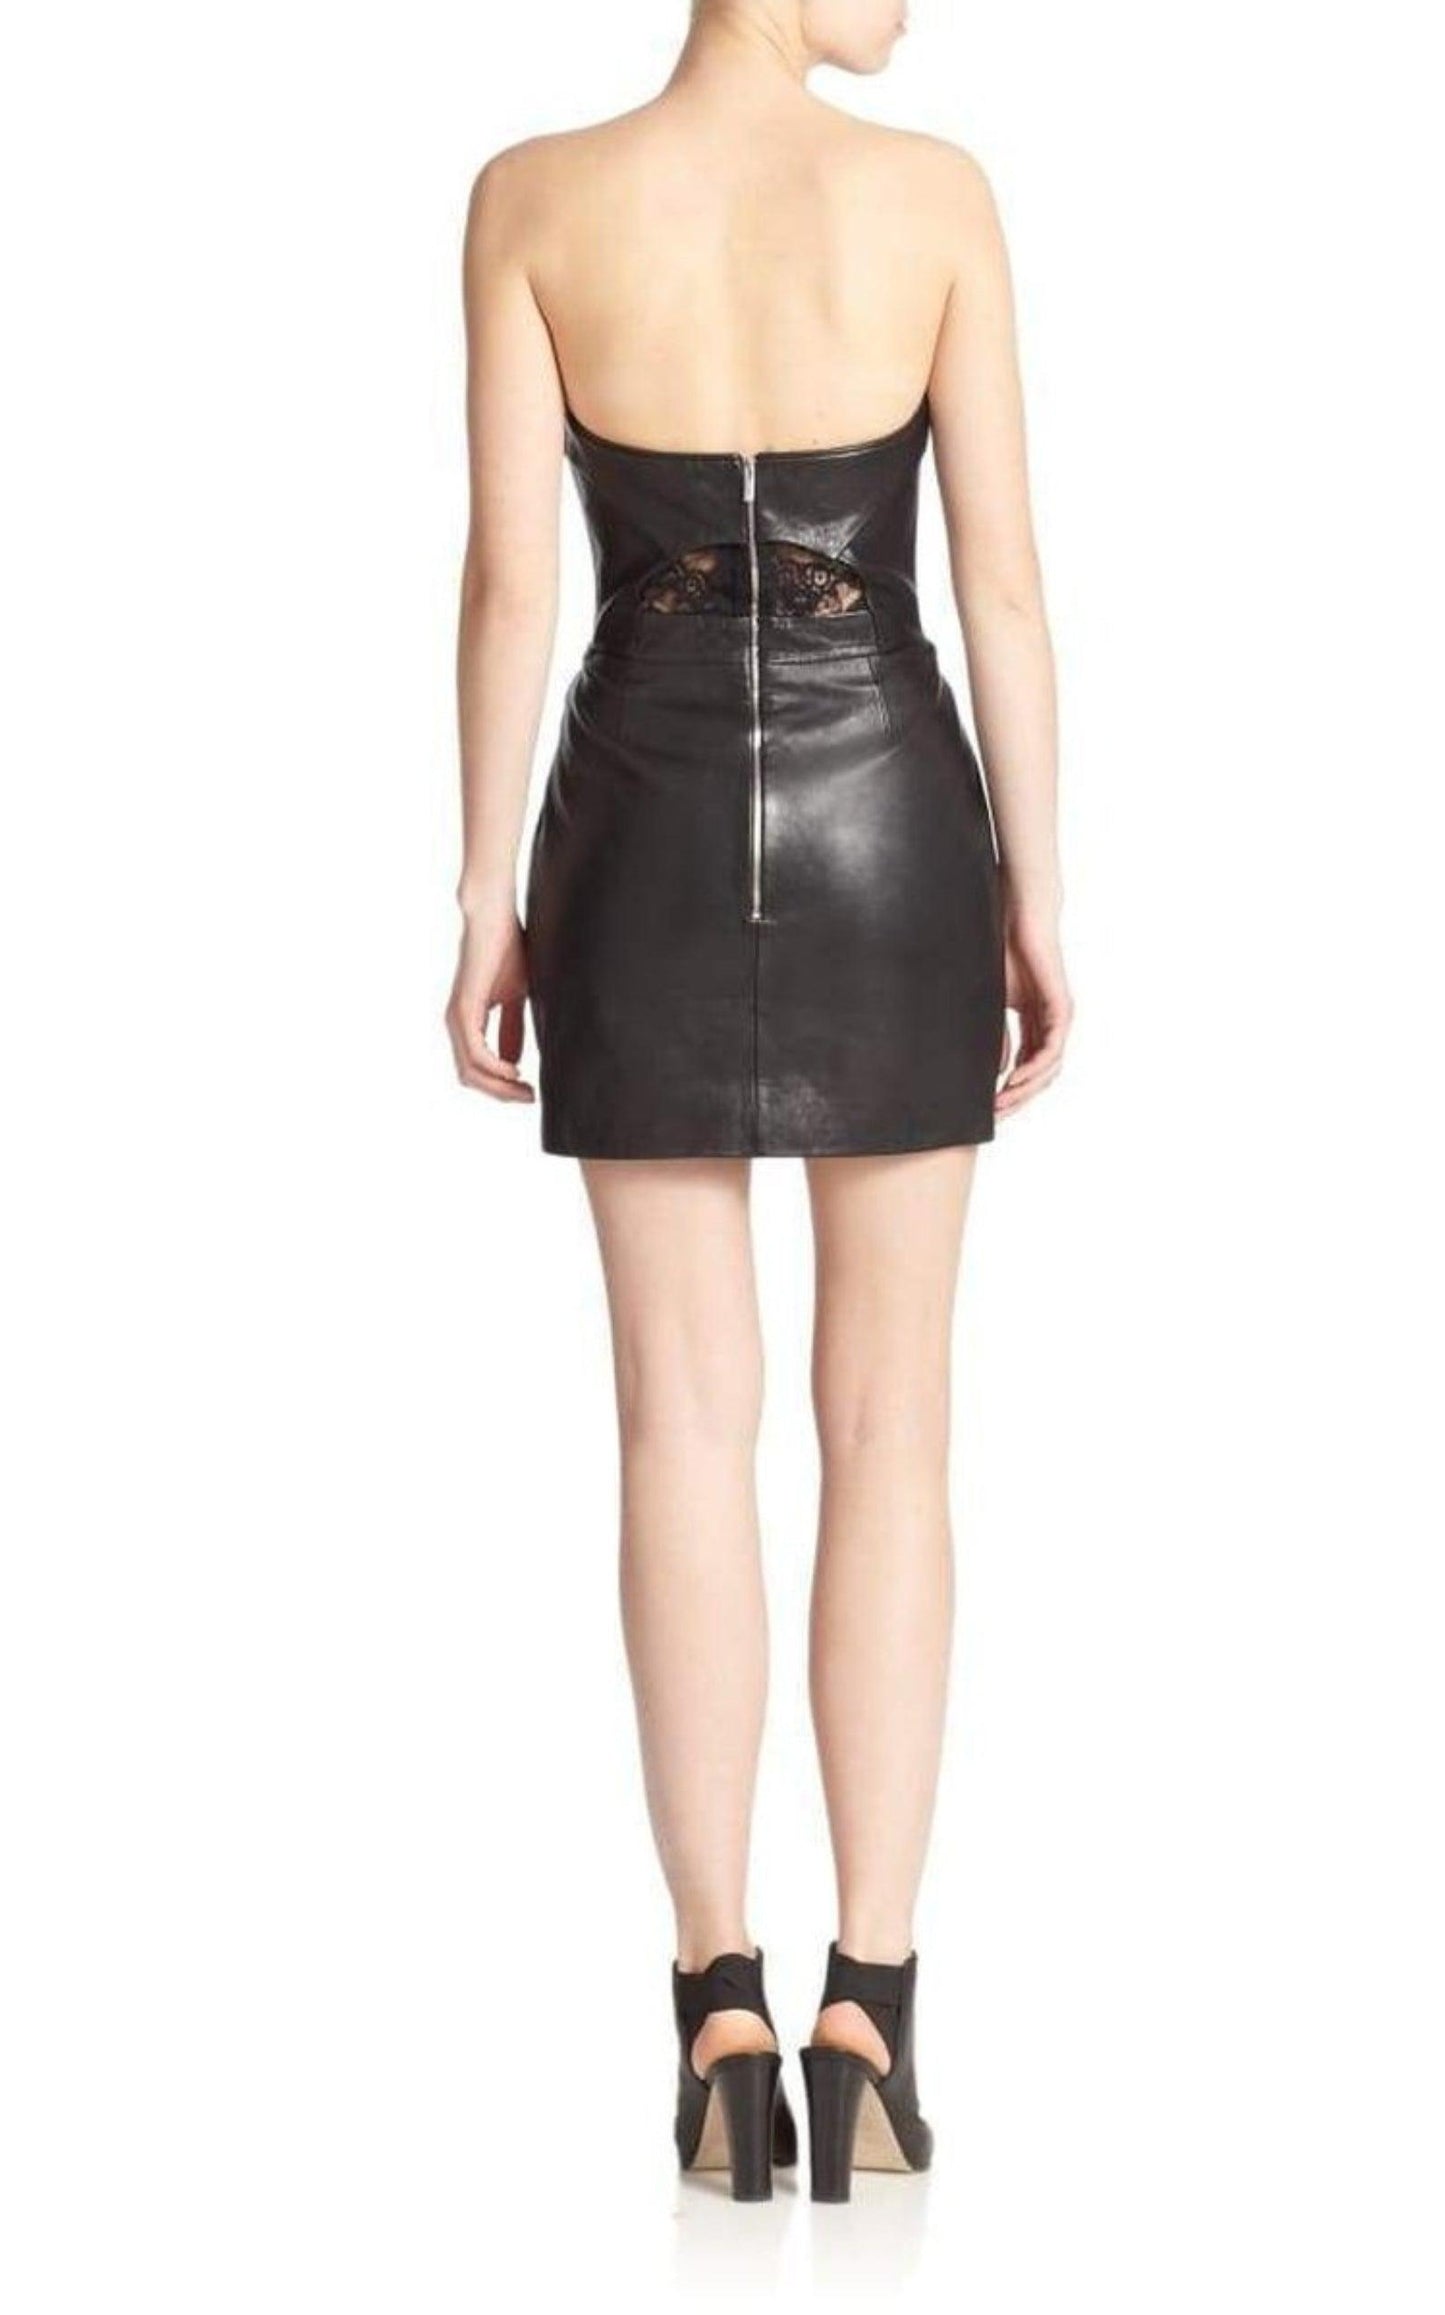  The KooplesBlack Leather Strapless Dress - Runway Catalog